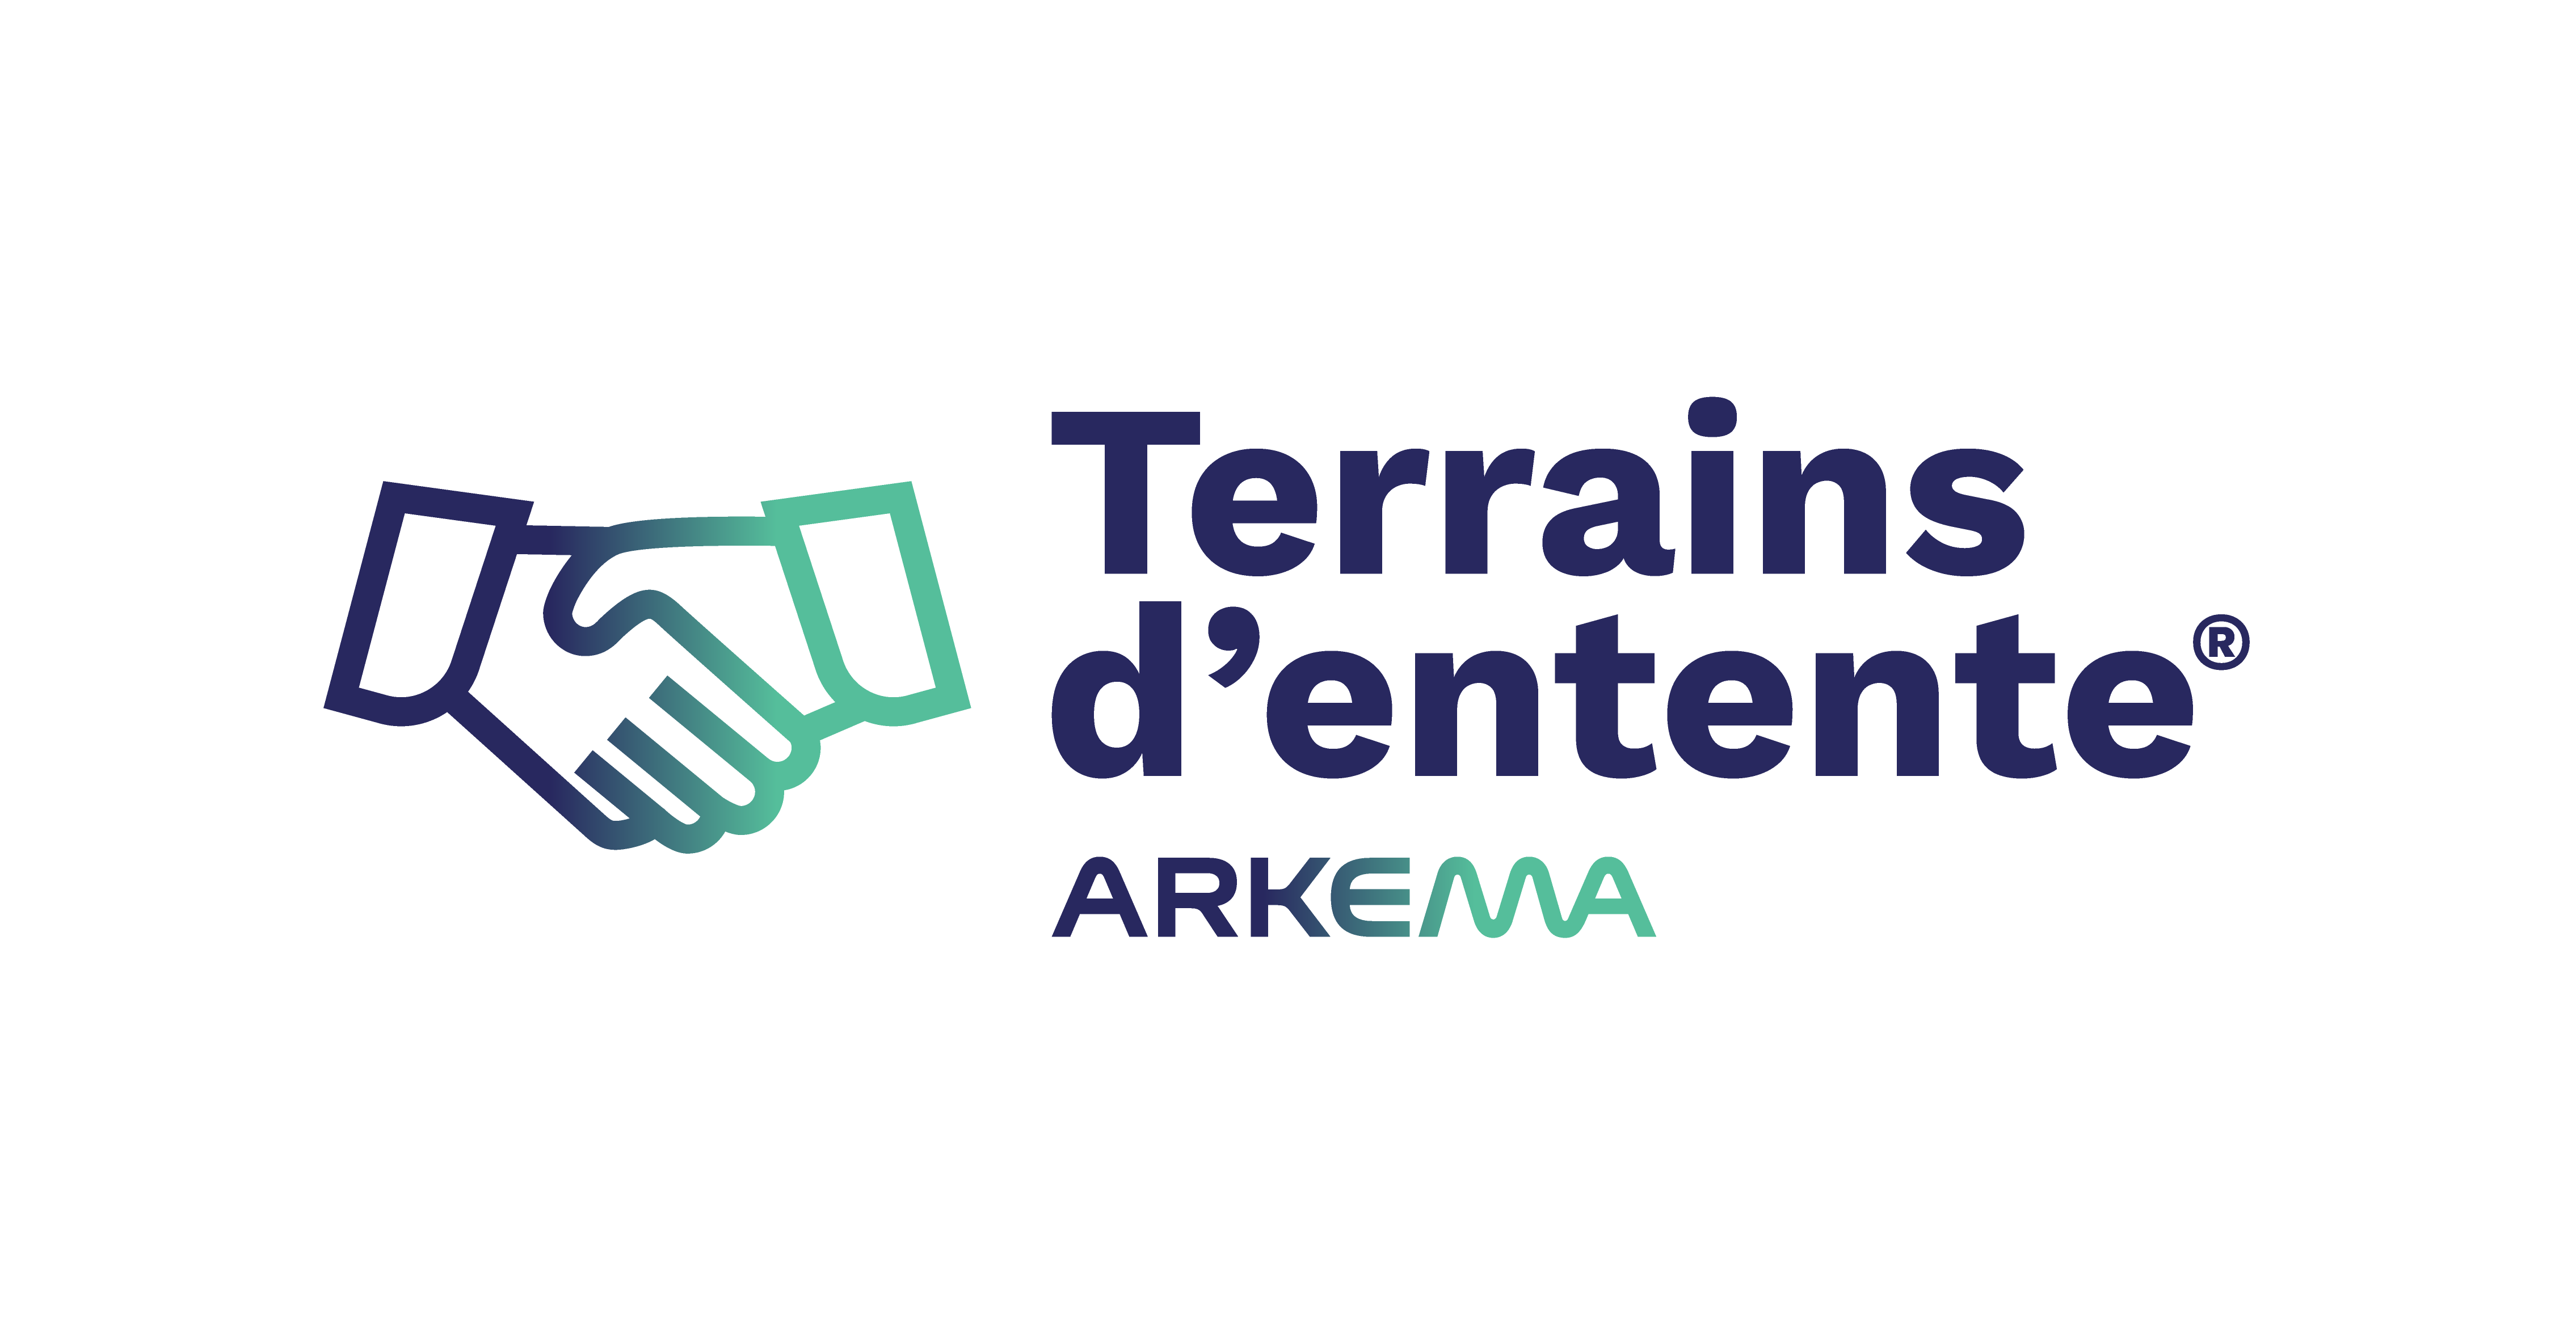 ark-terrains-dentente-hd.jpg_1644223205-removebg-preview.png